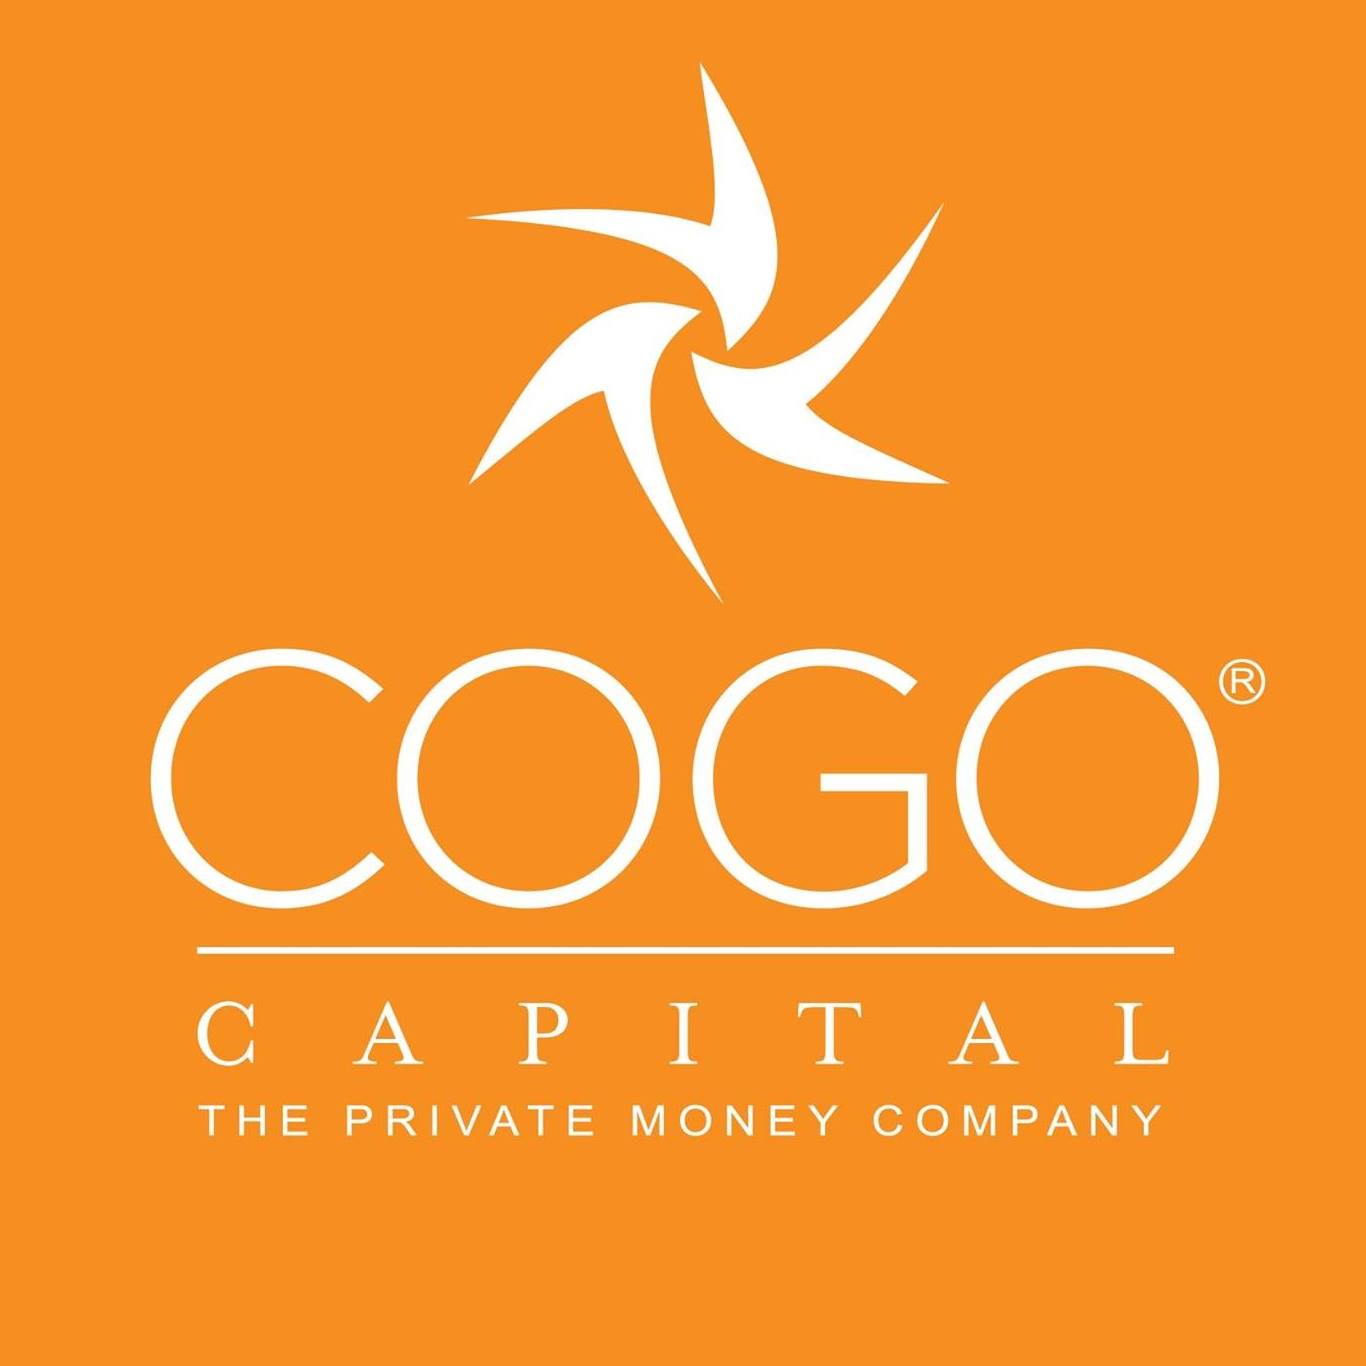 Business logo of Cogo Capital — The Private Money Company